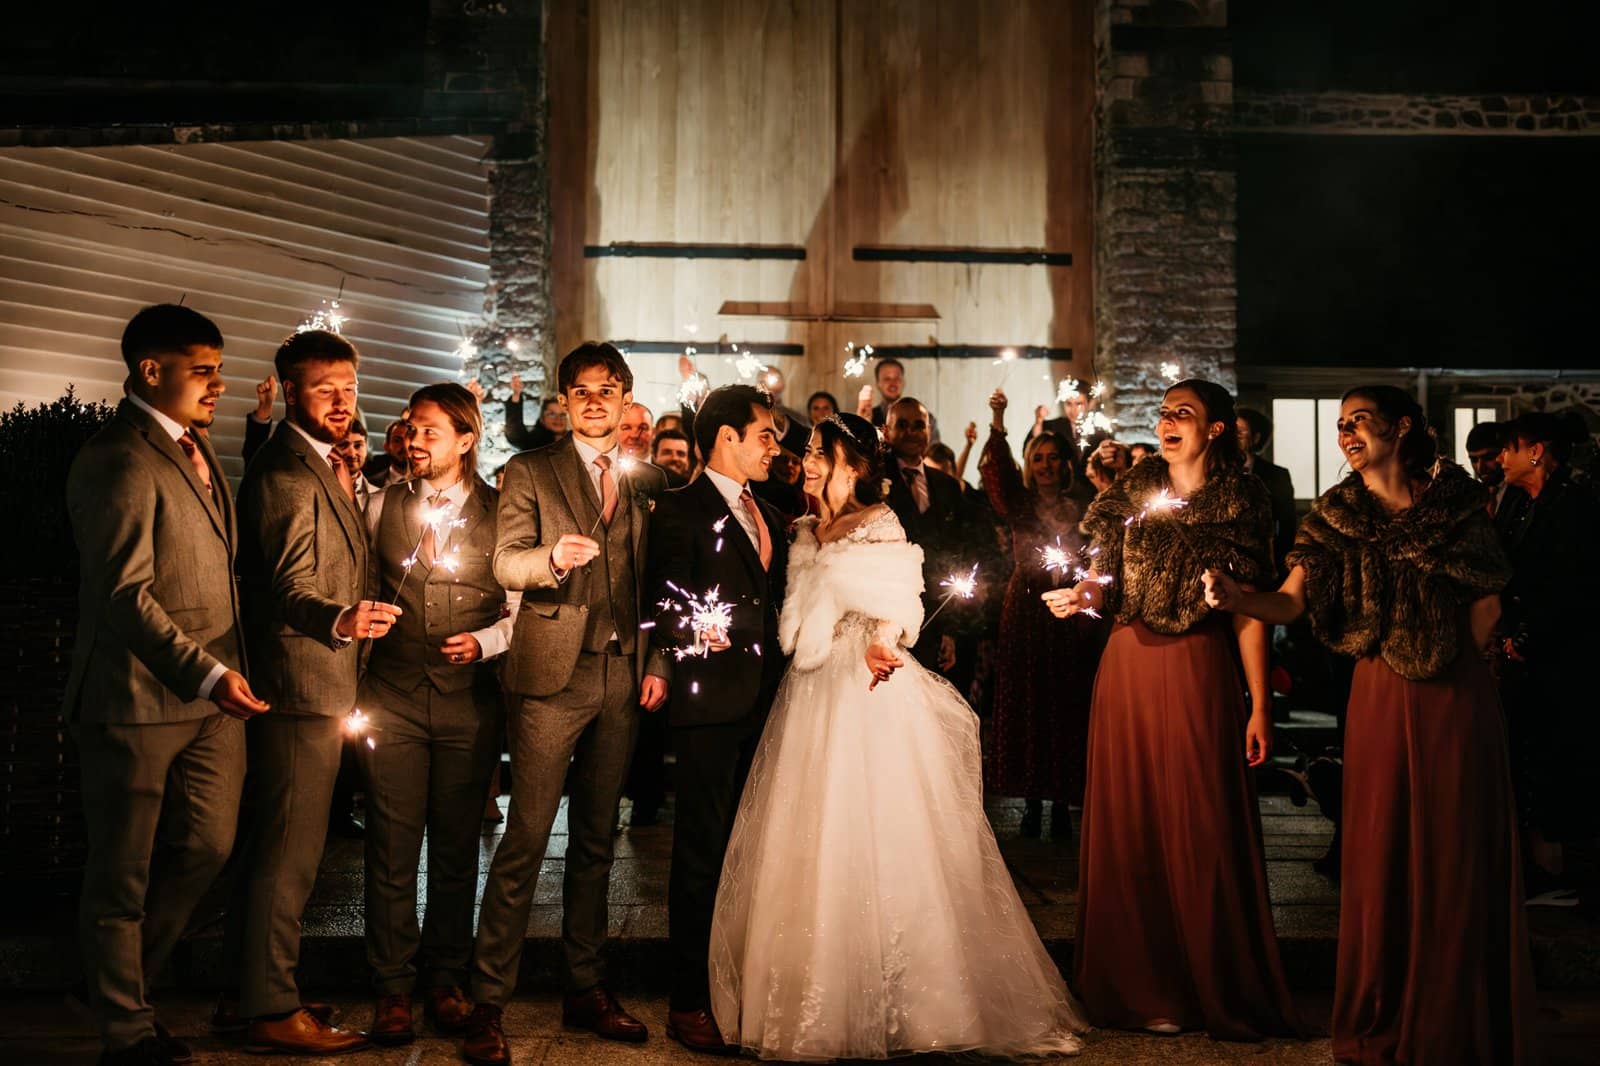 sparklers on the wedding night